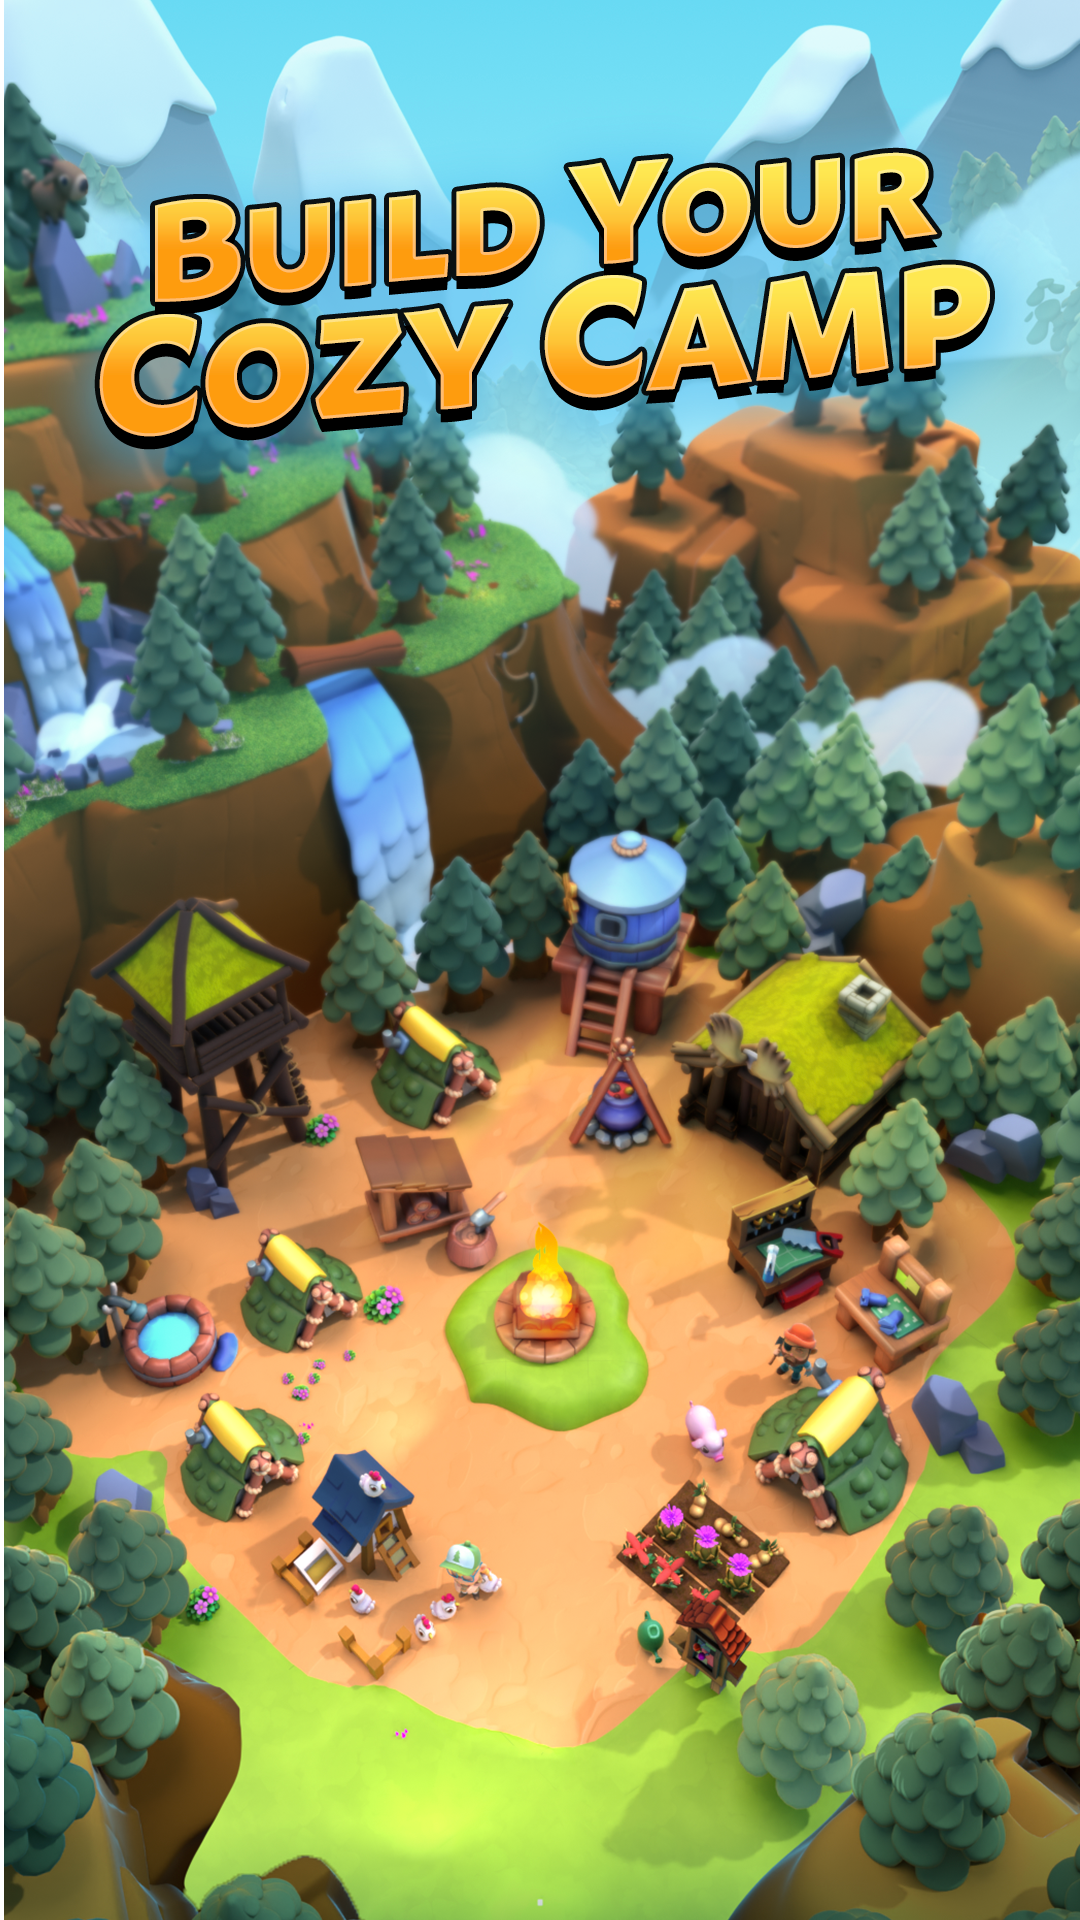 Screenshot of Camp Mountain